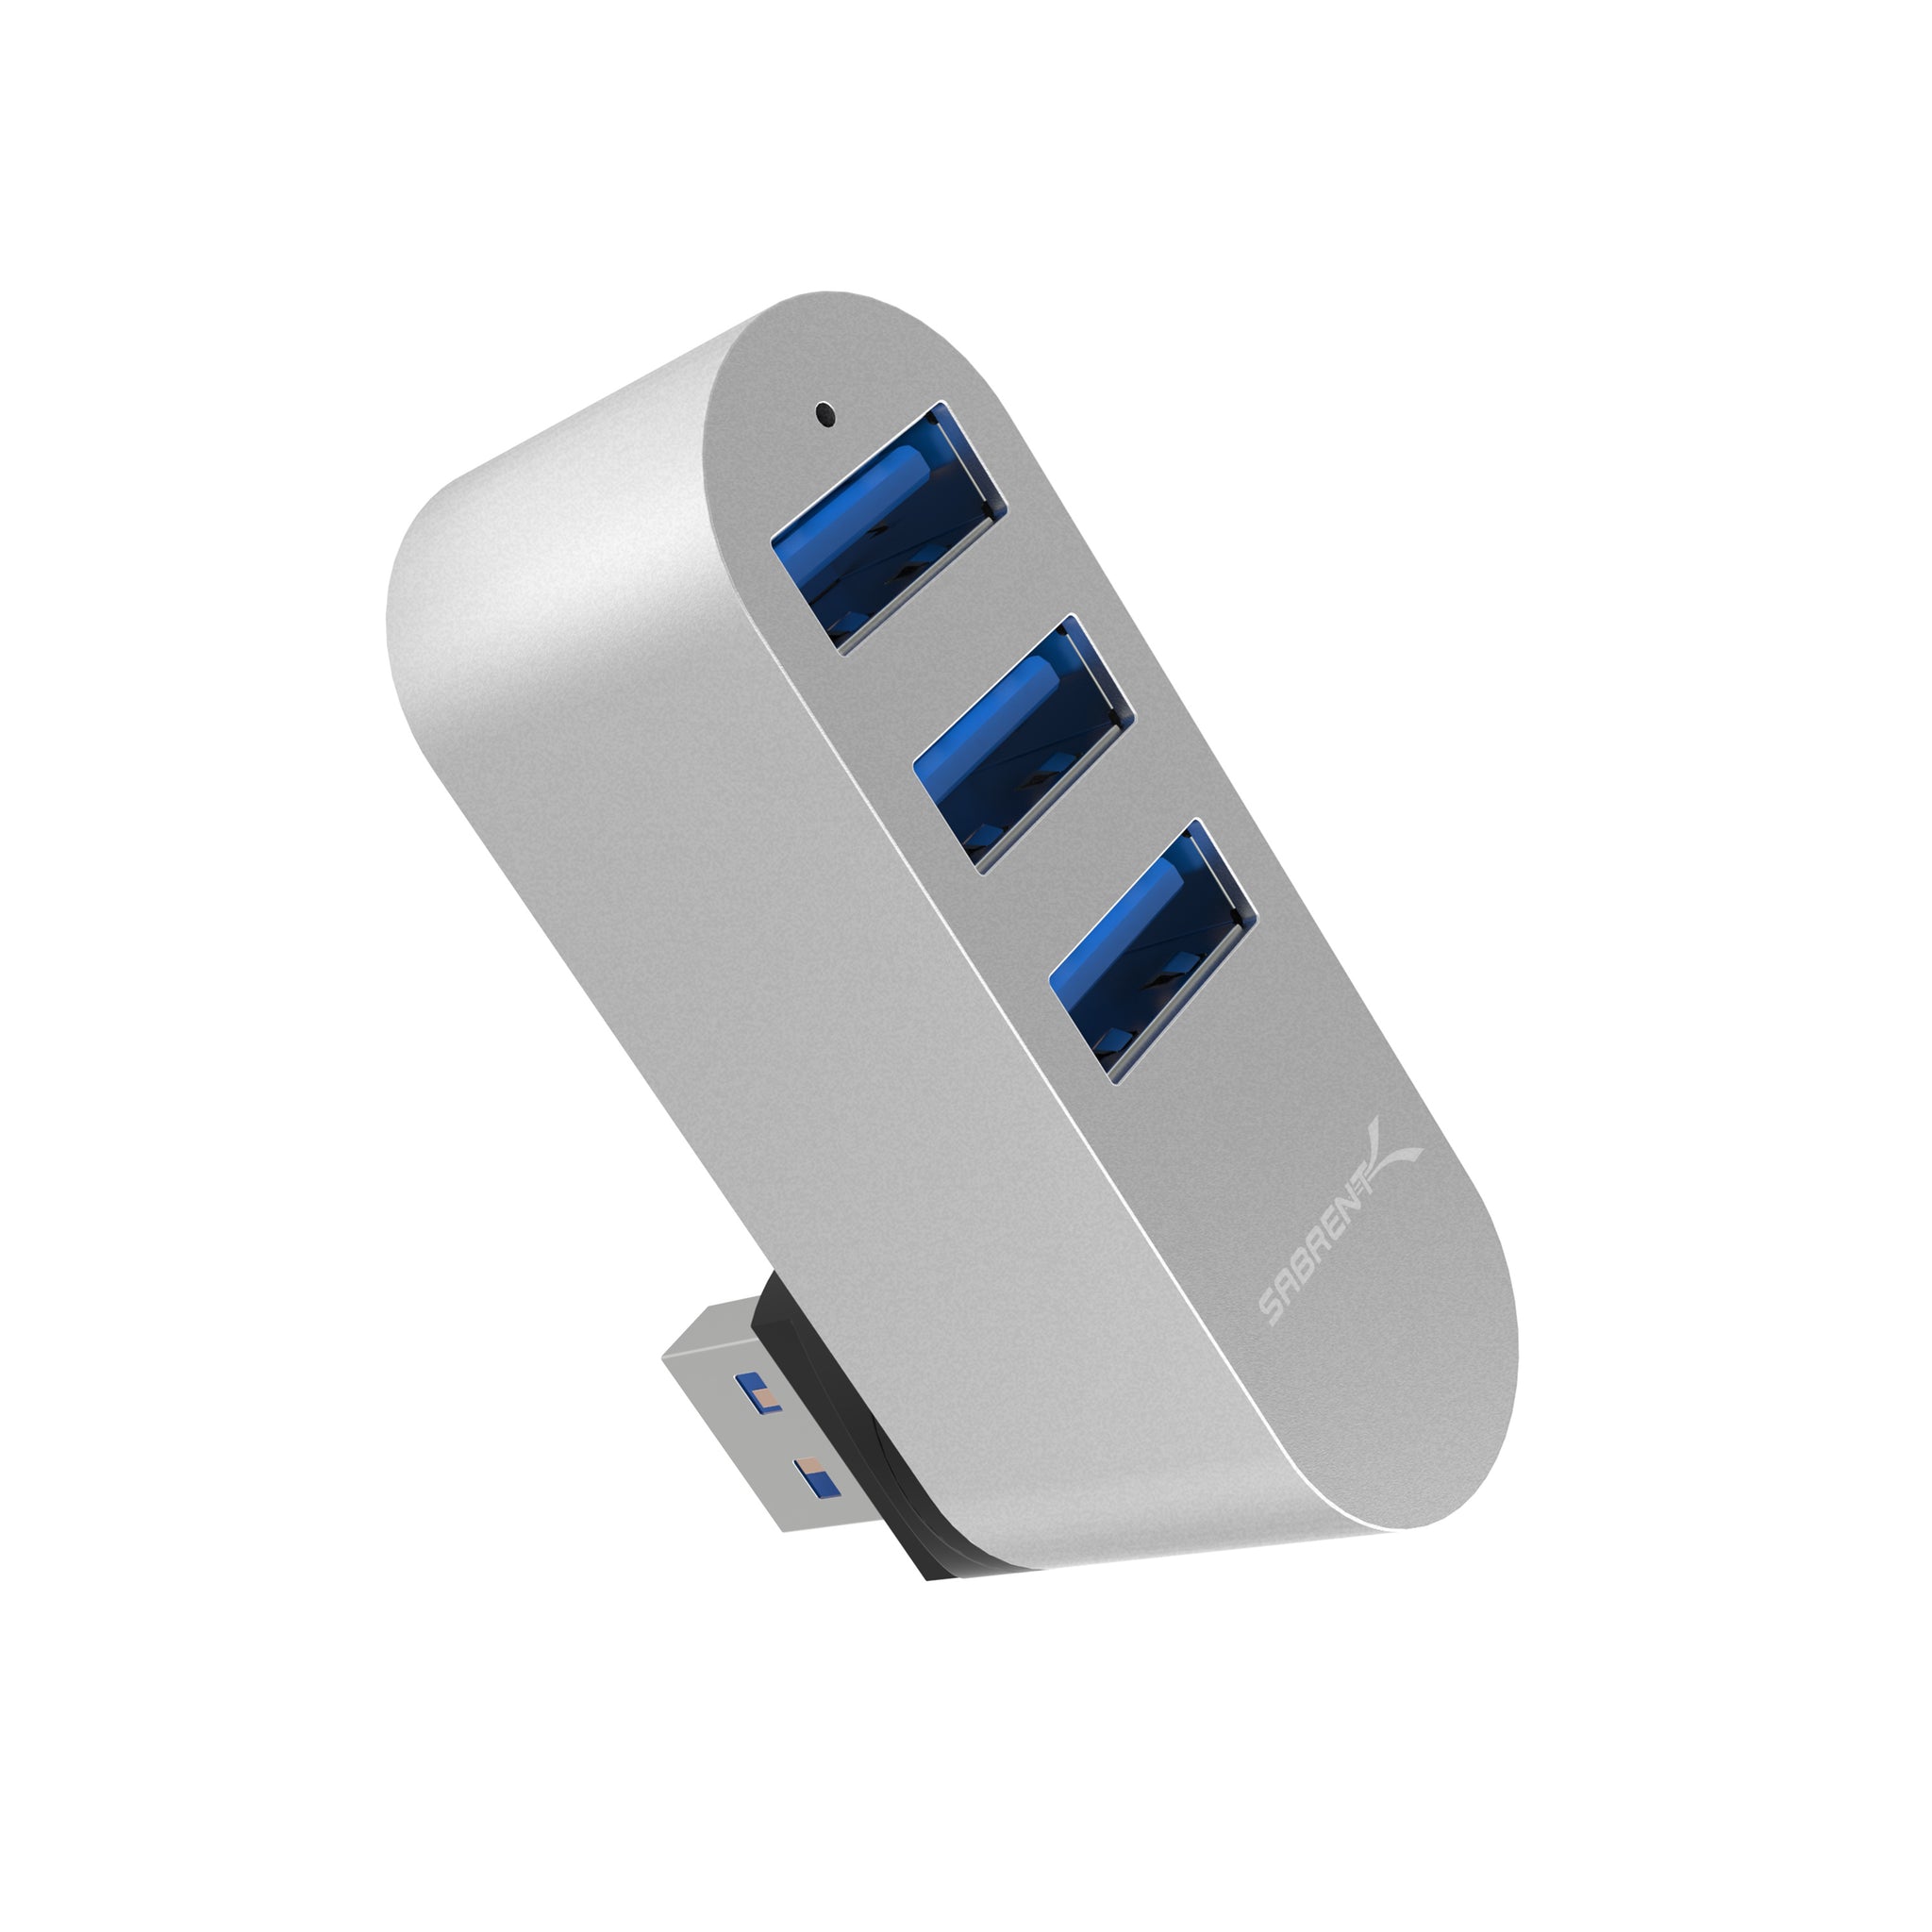 SABRENT Premium 4 Port Aluminum USB 3.0 Hub (30 Cable) for iMac, MacBook,  MacBook Pro, MacBook Air, Mac Mini, or Any PC [Silver] (HB-MAC3) 